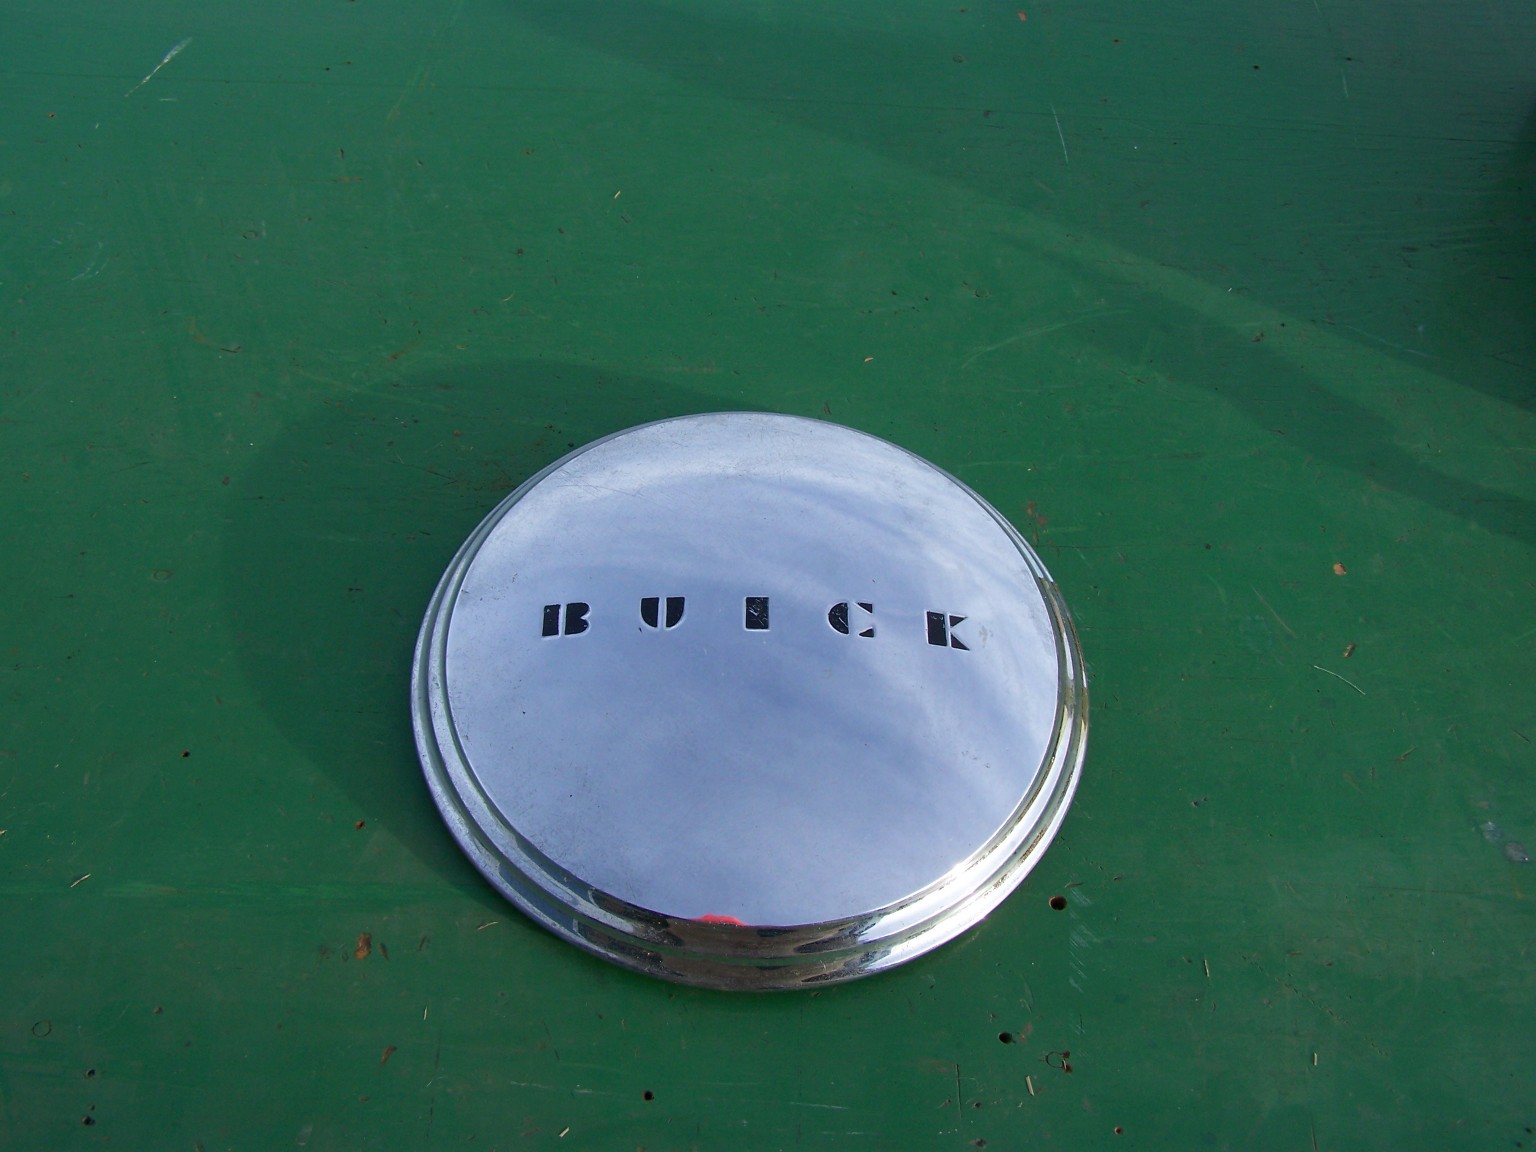 Buick Block Letter Hubcap